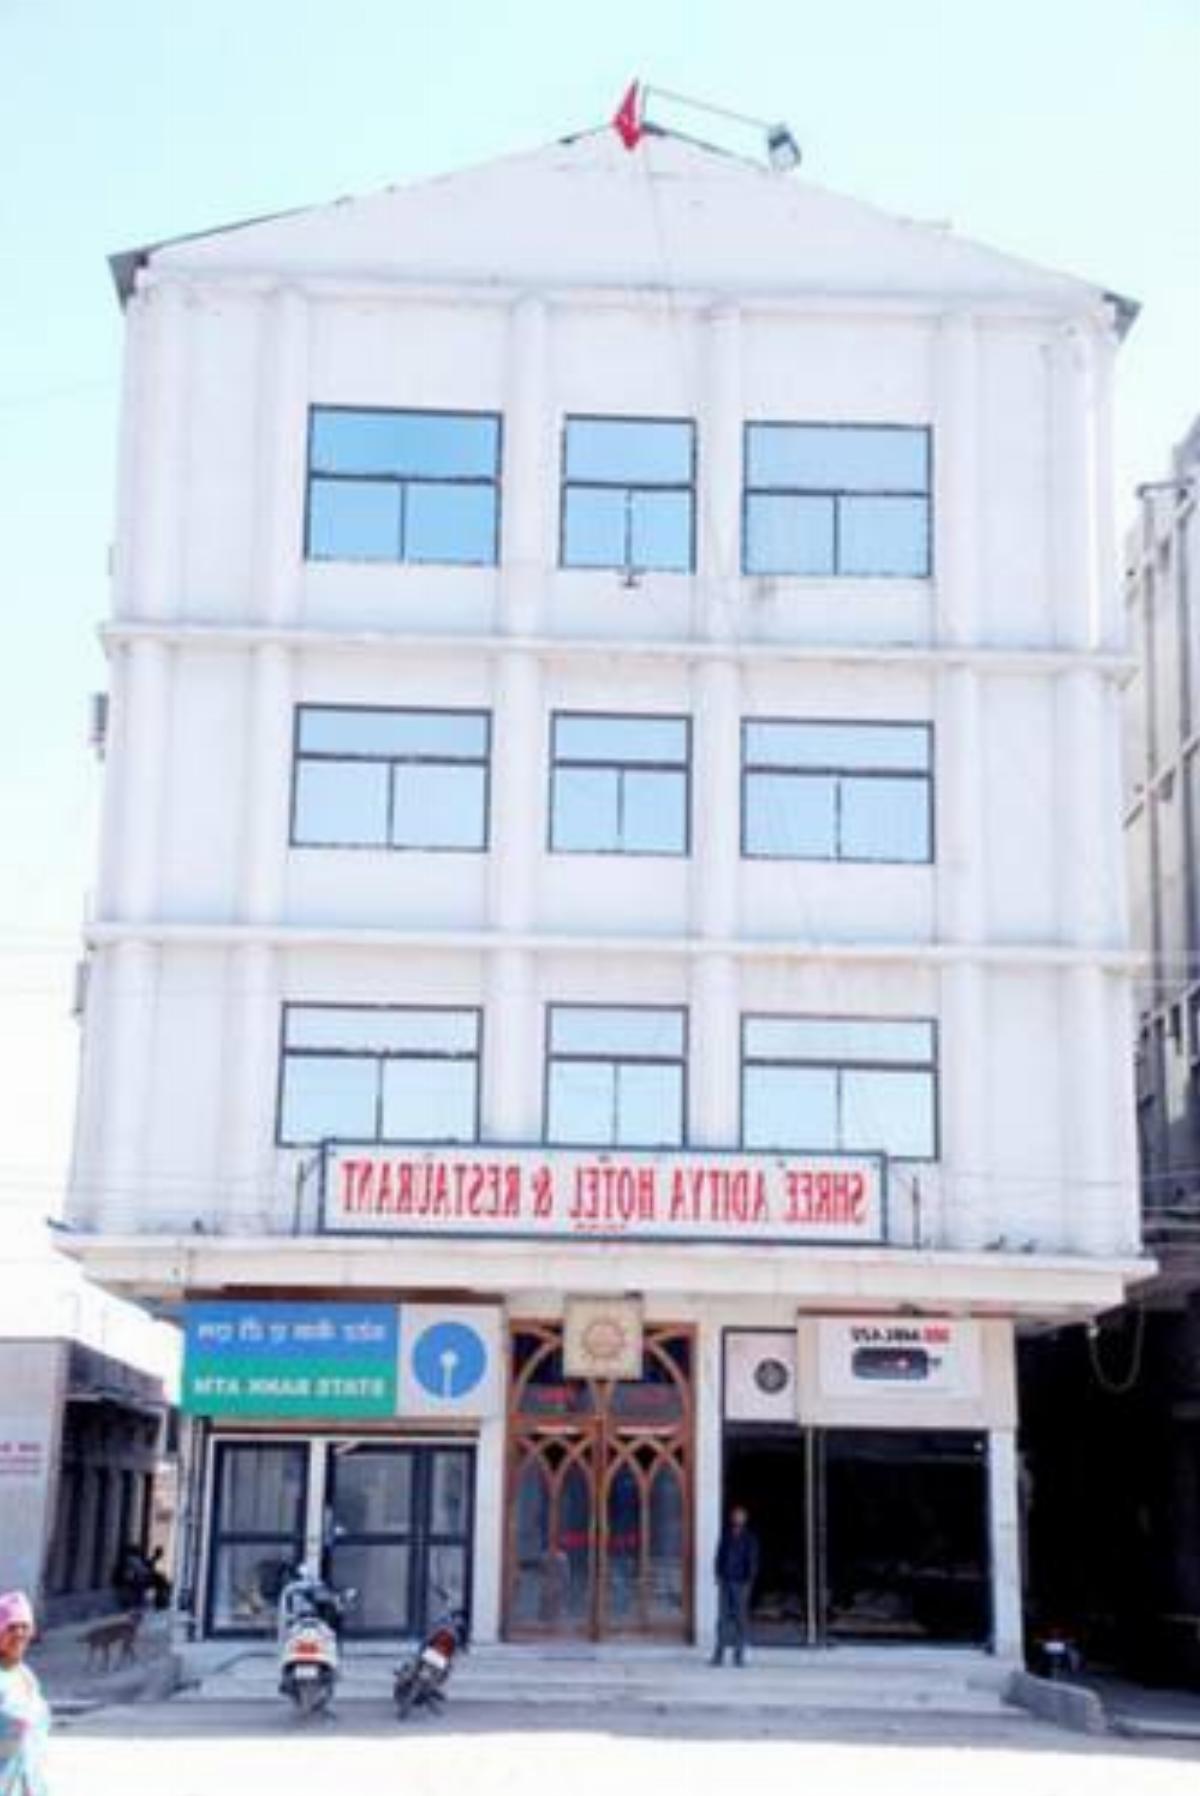 Shree Aditya Hotel and Restaurant